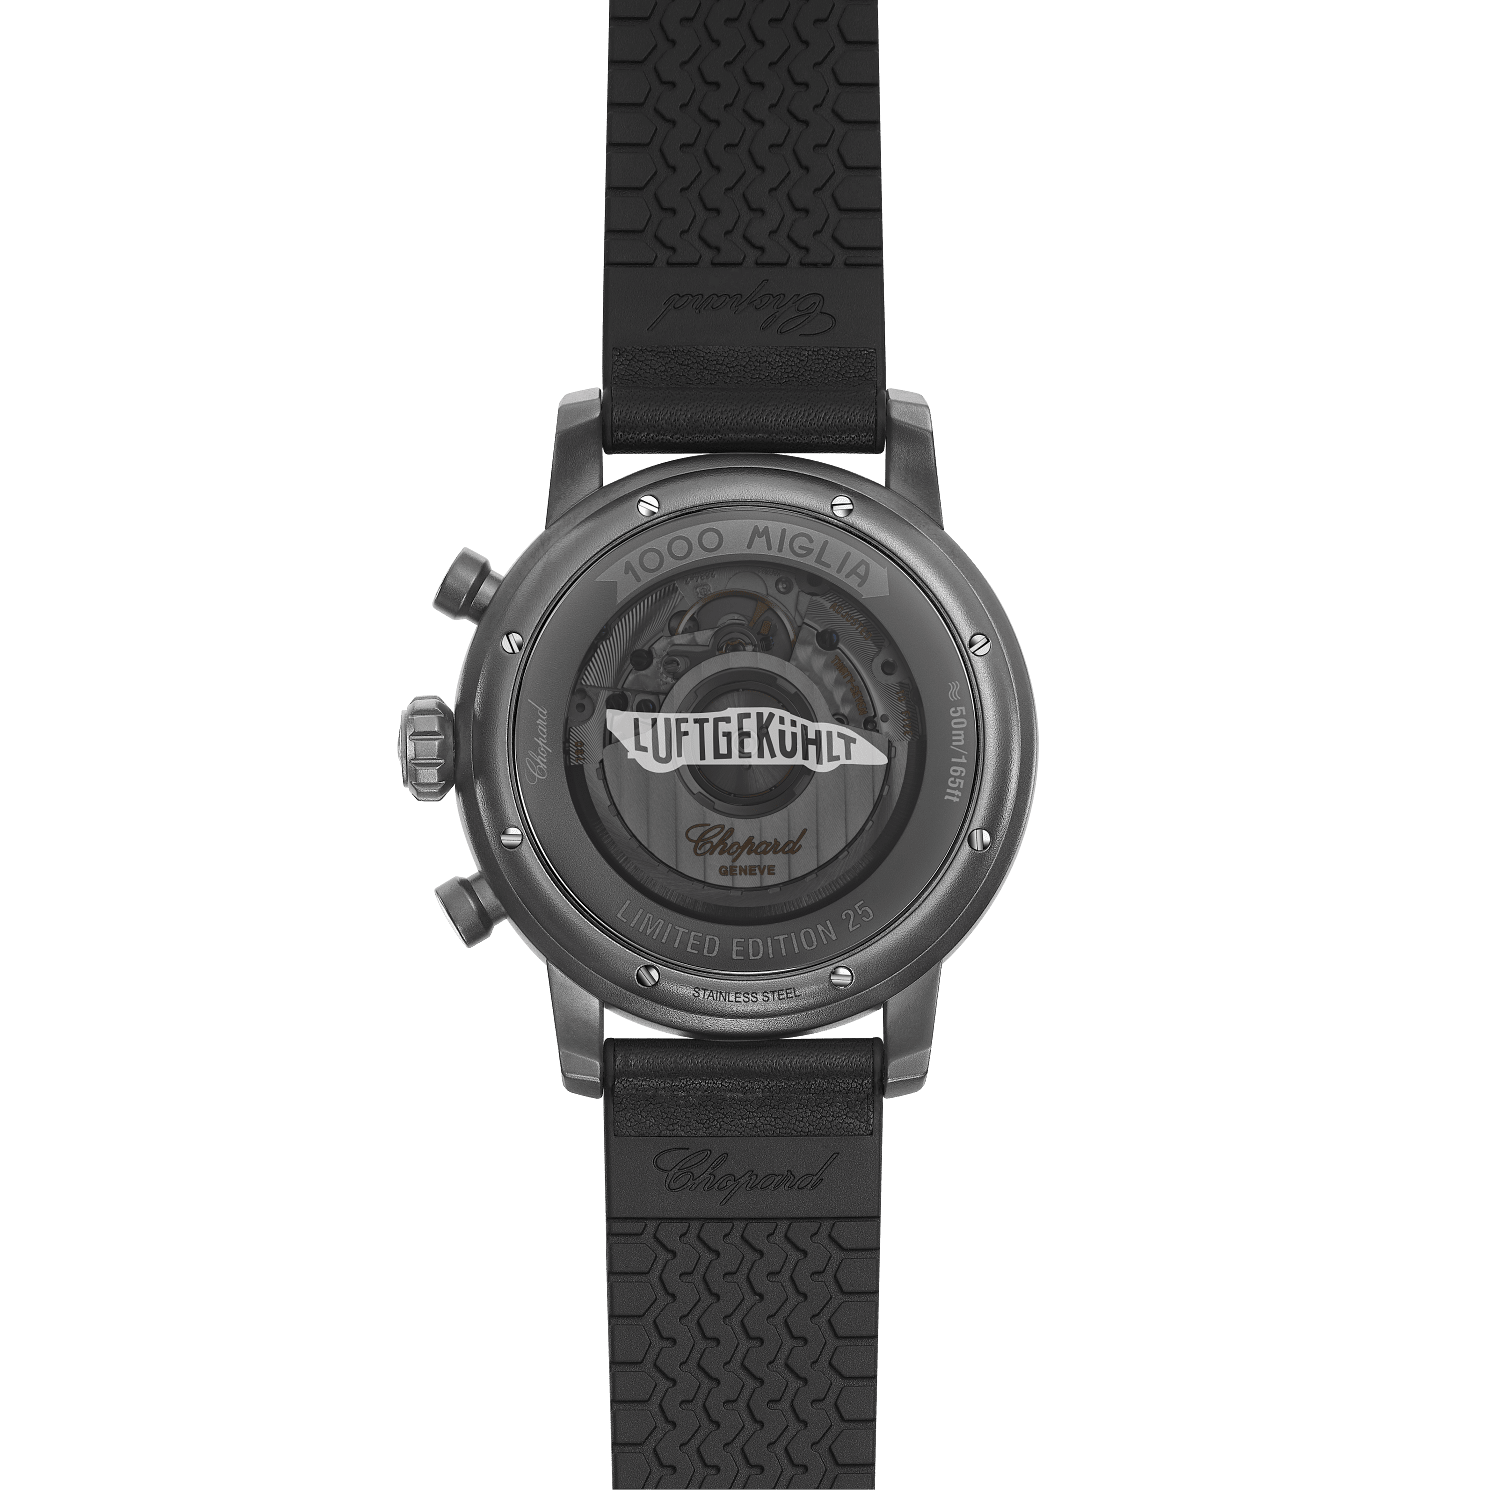 Mille Miglia Chronograph - Luftgekühlt Edition